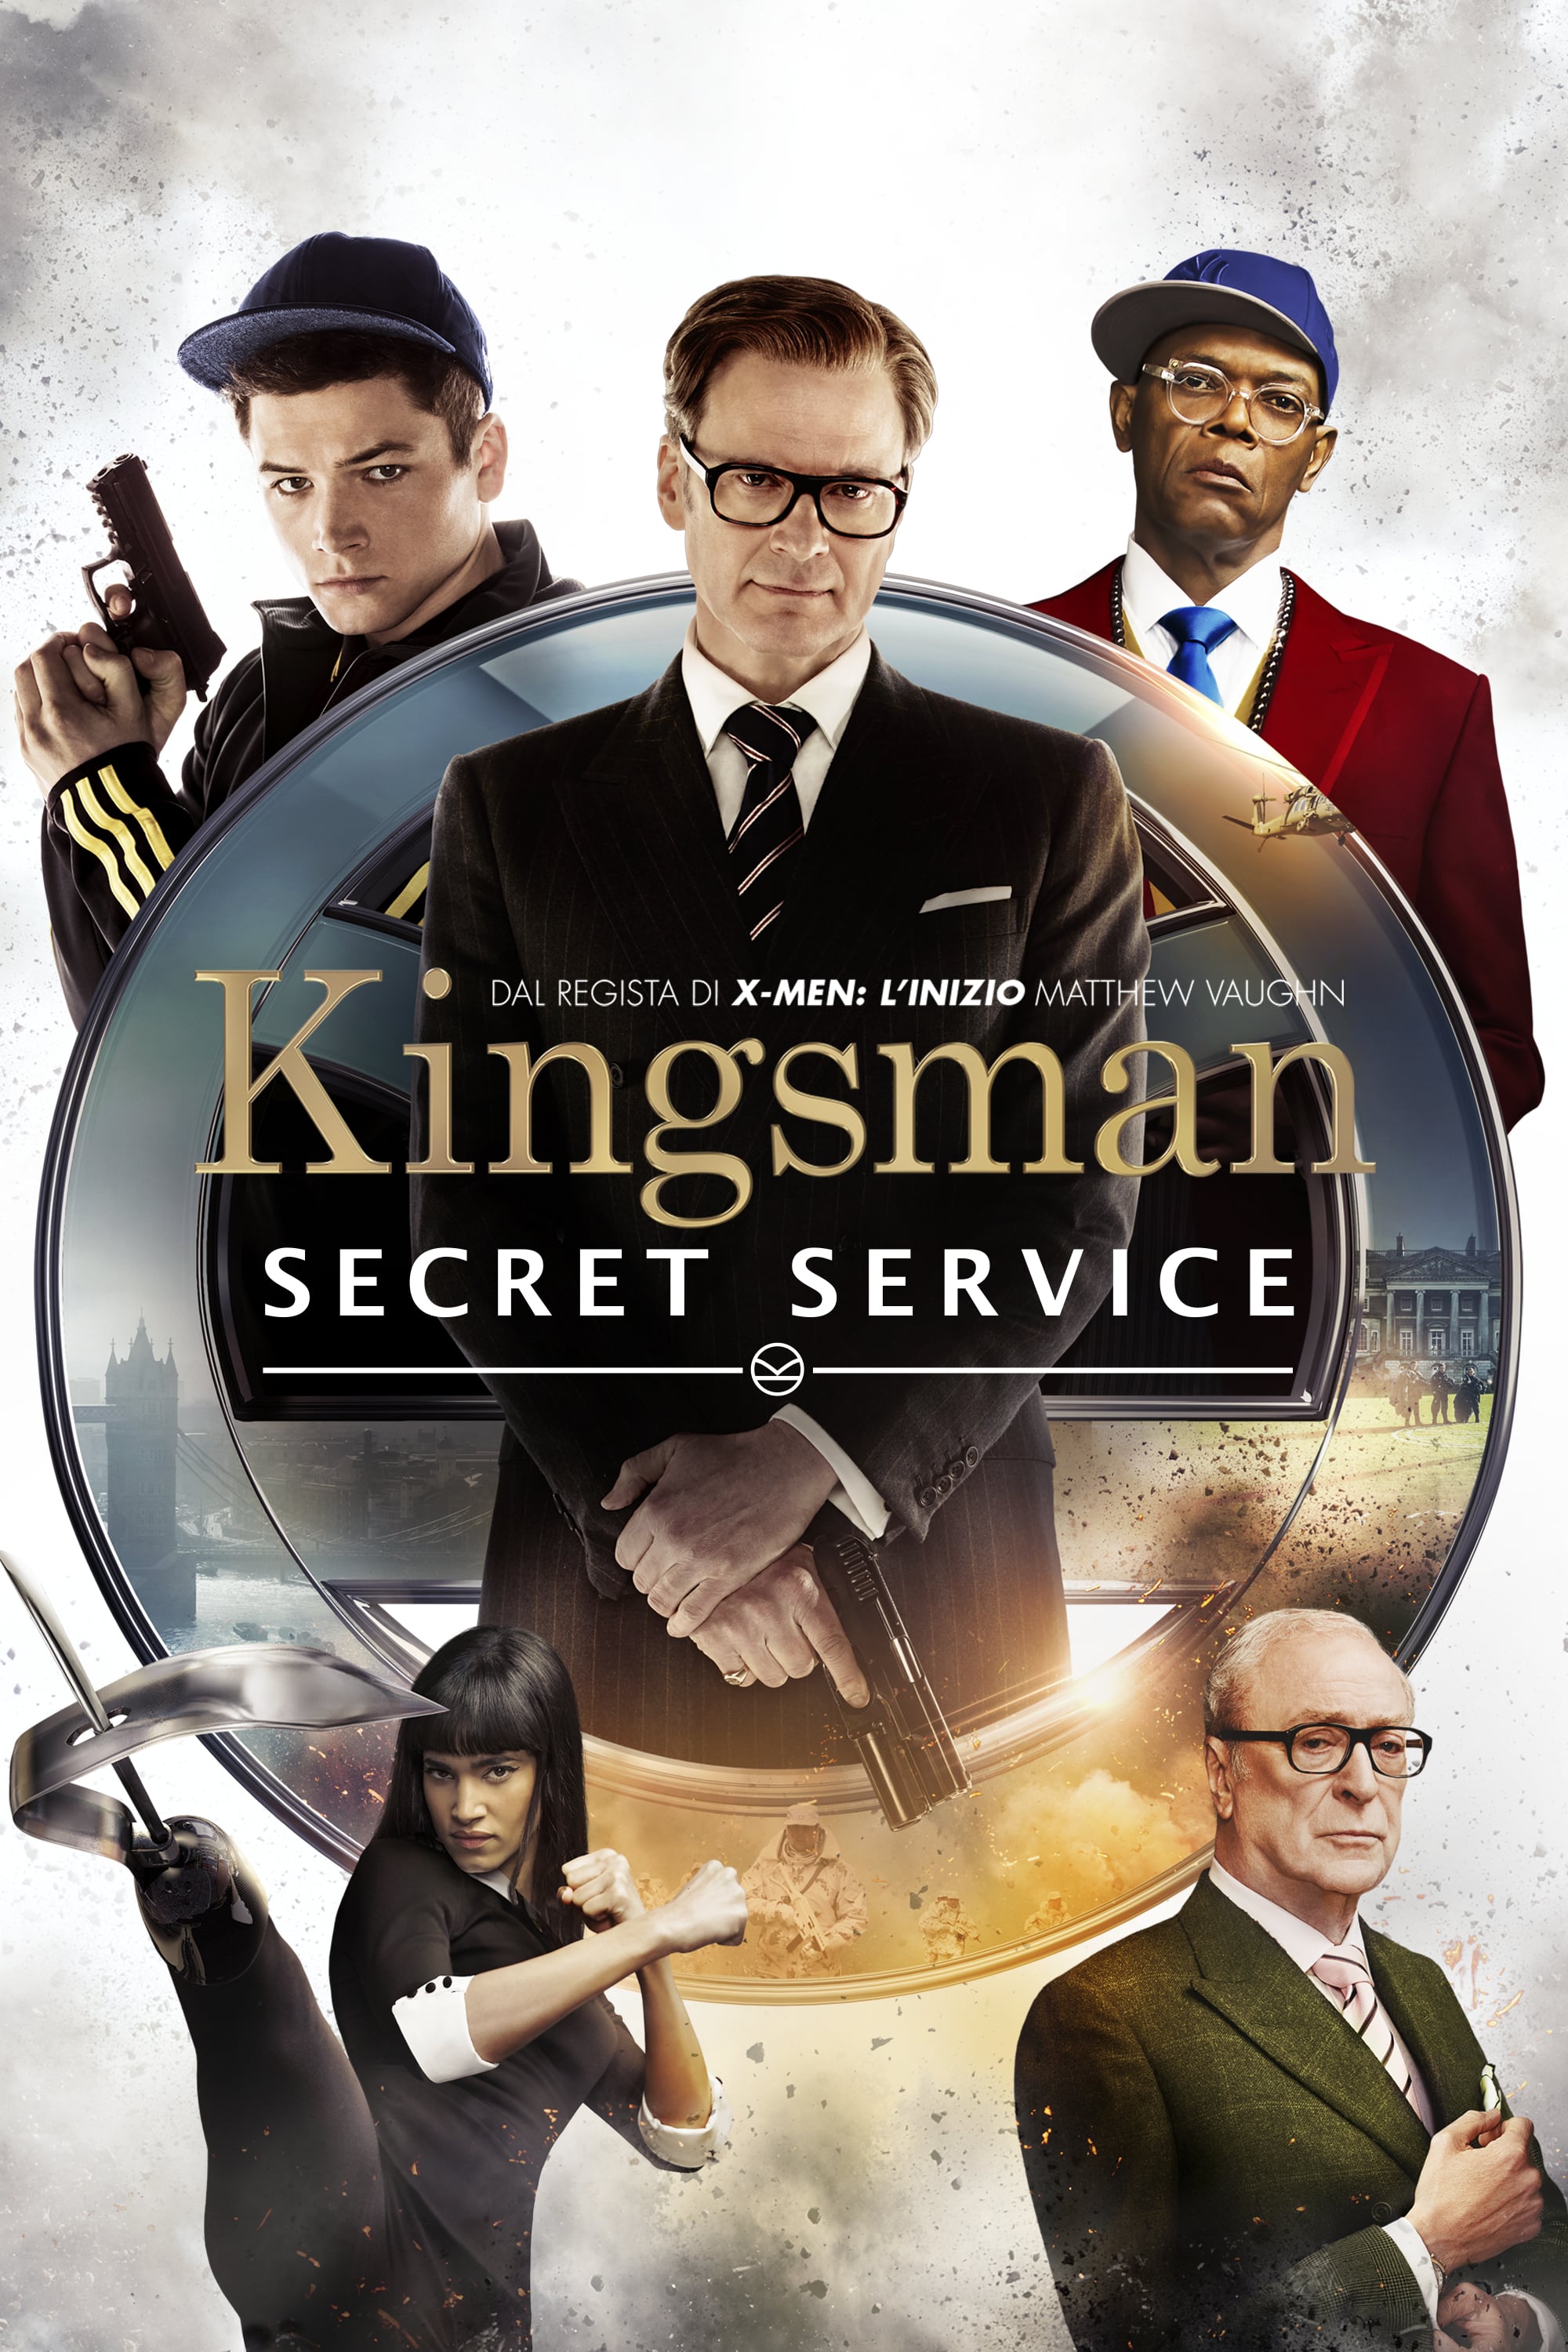 Кингсман: Секретная служба